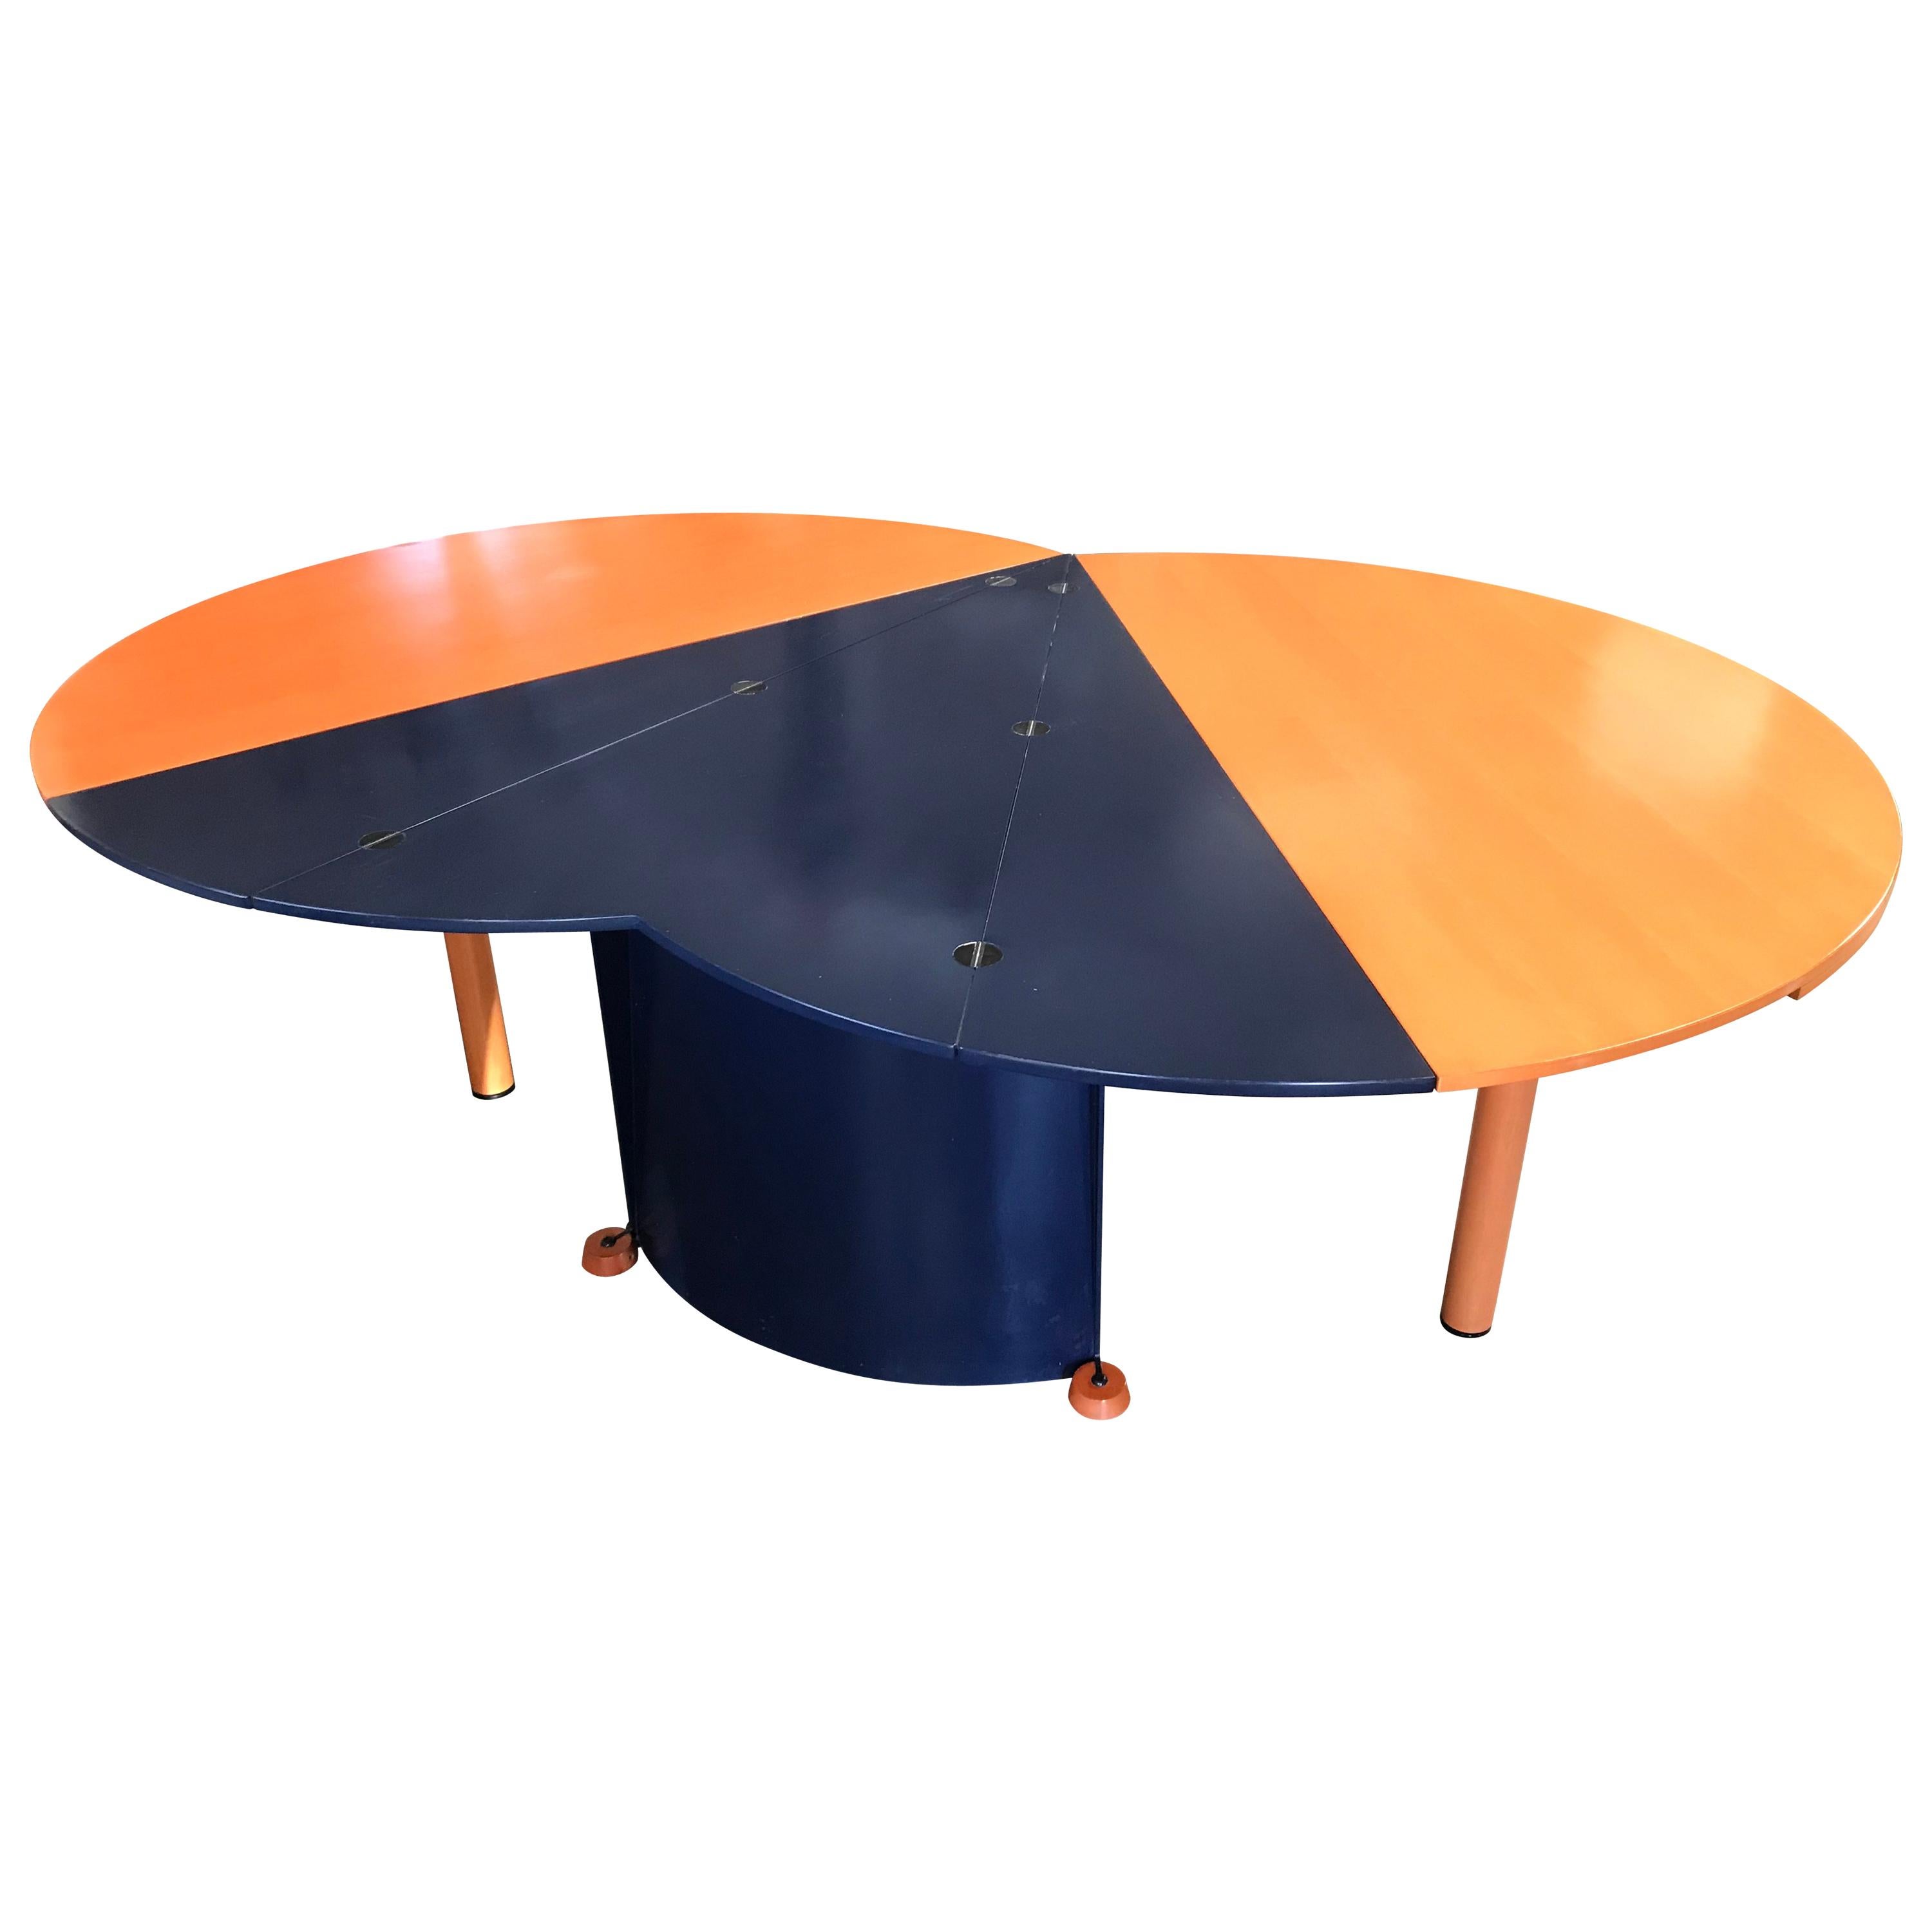 Modern Orange and Blue Dining Table by Castelijn